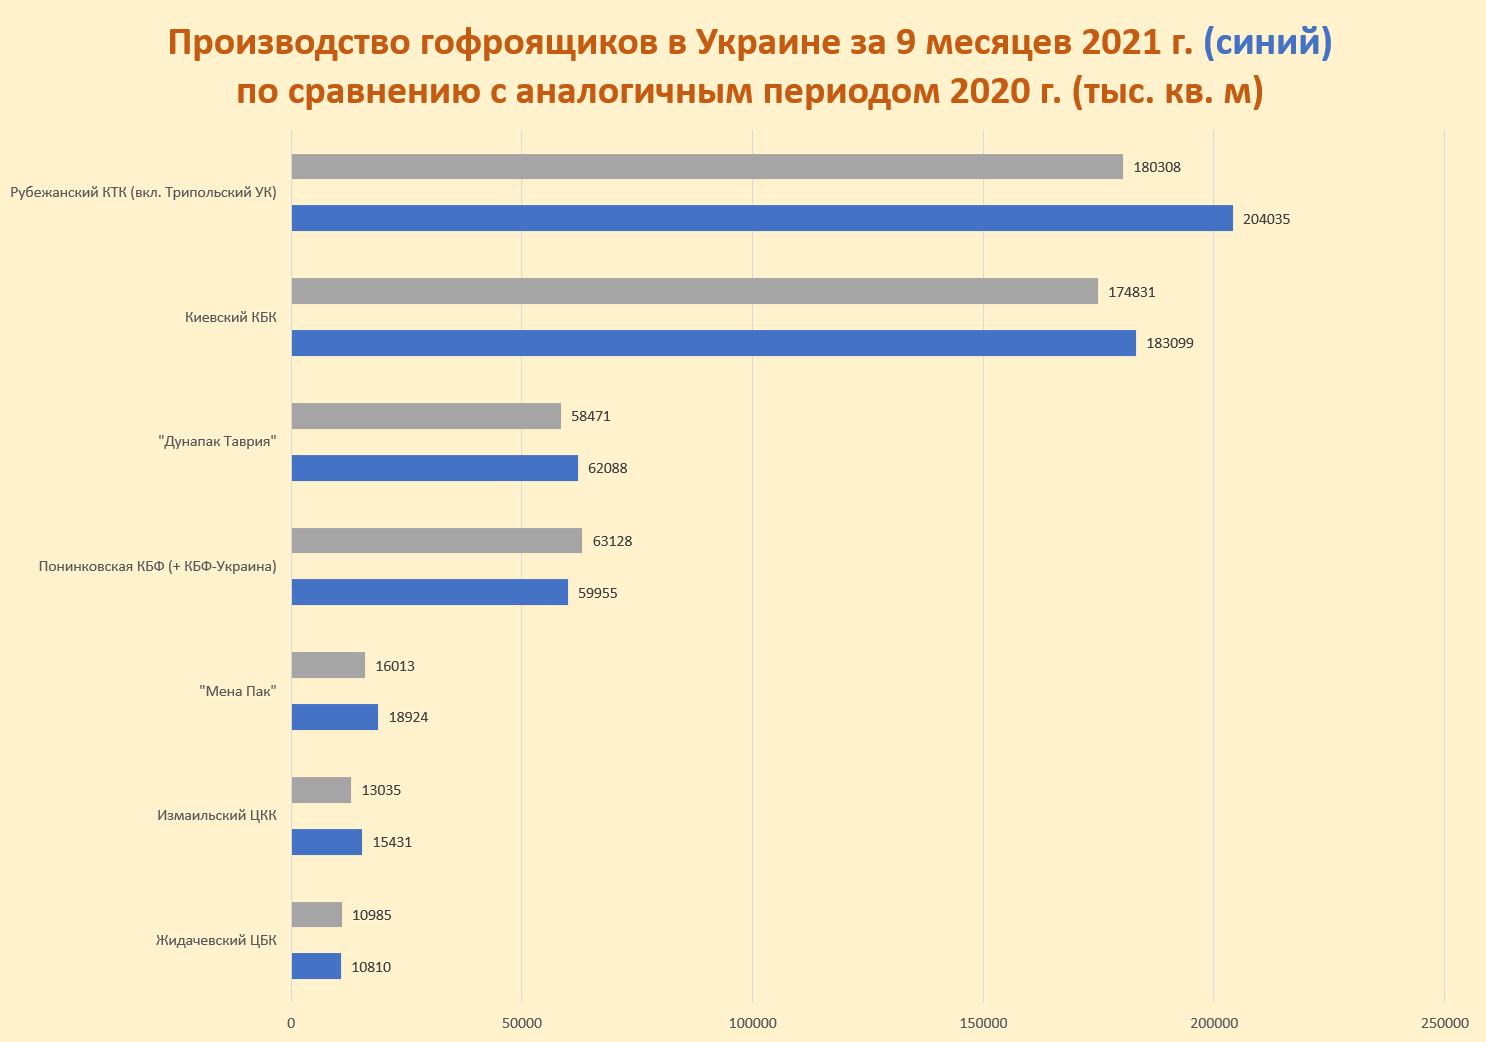 За 9 месяцев ЦБП Украины нарастило производство на 14 %